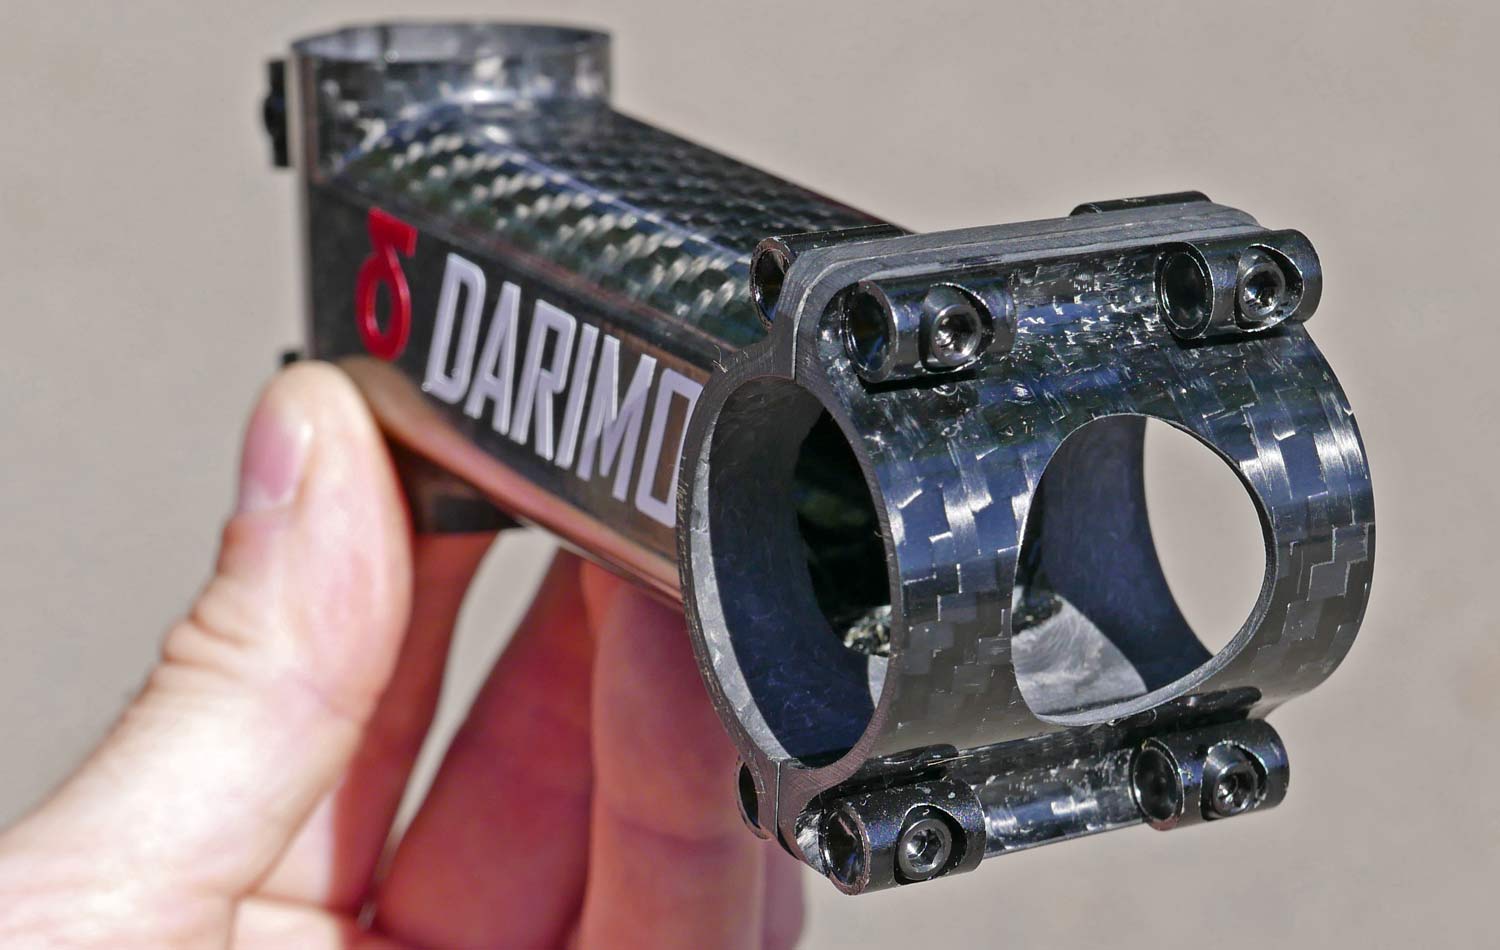 Darimo Stem ultralight lightweight handmade carbon road bike stem, made-in-Spain